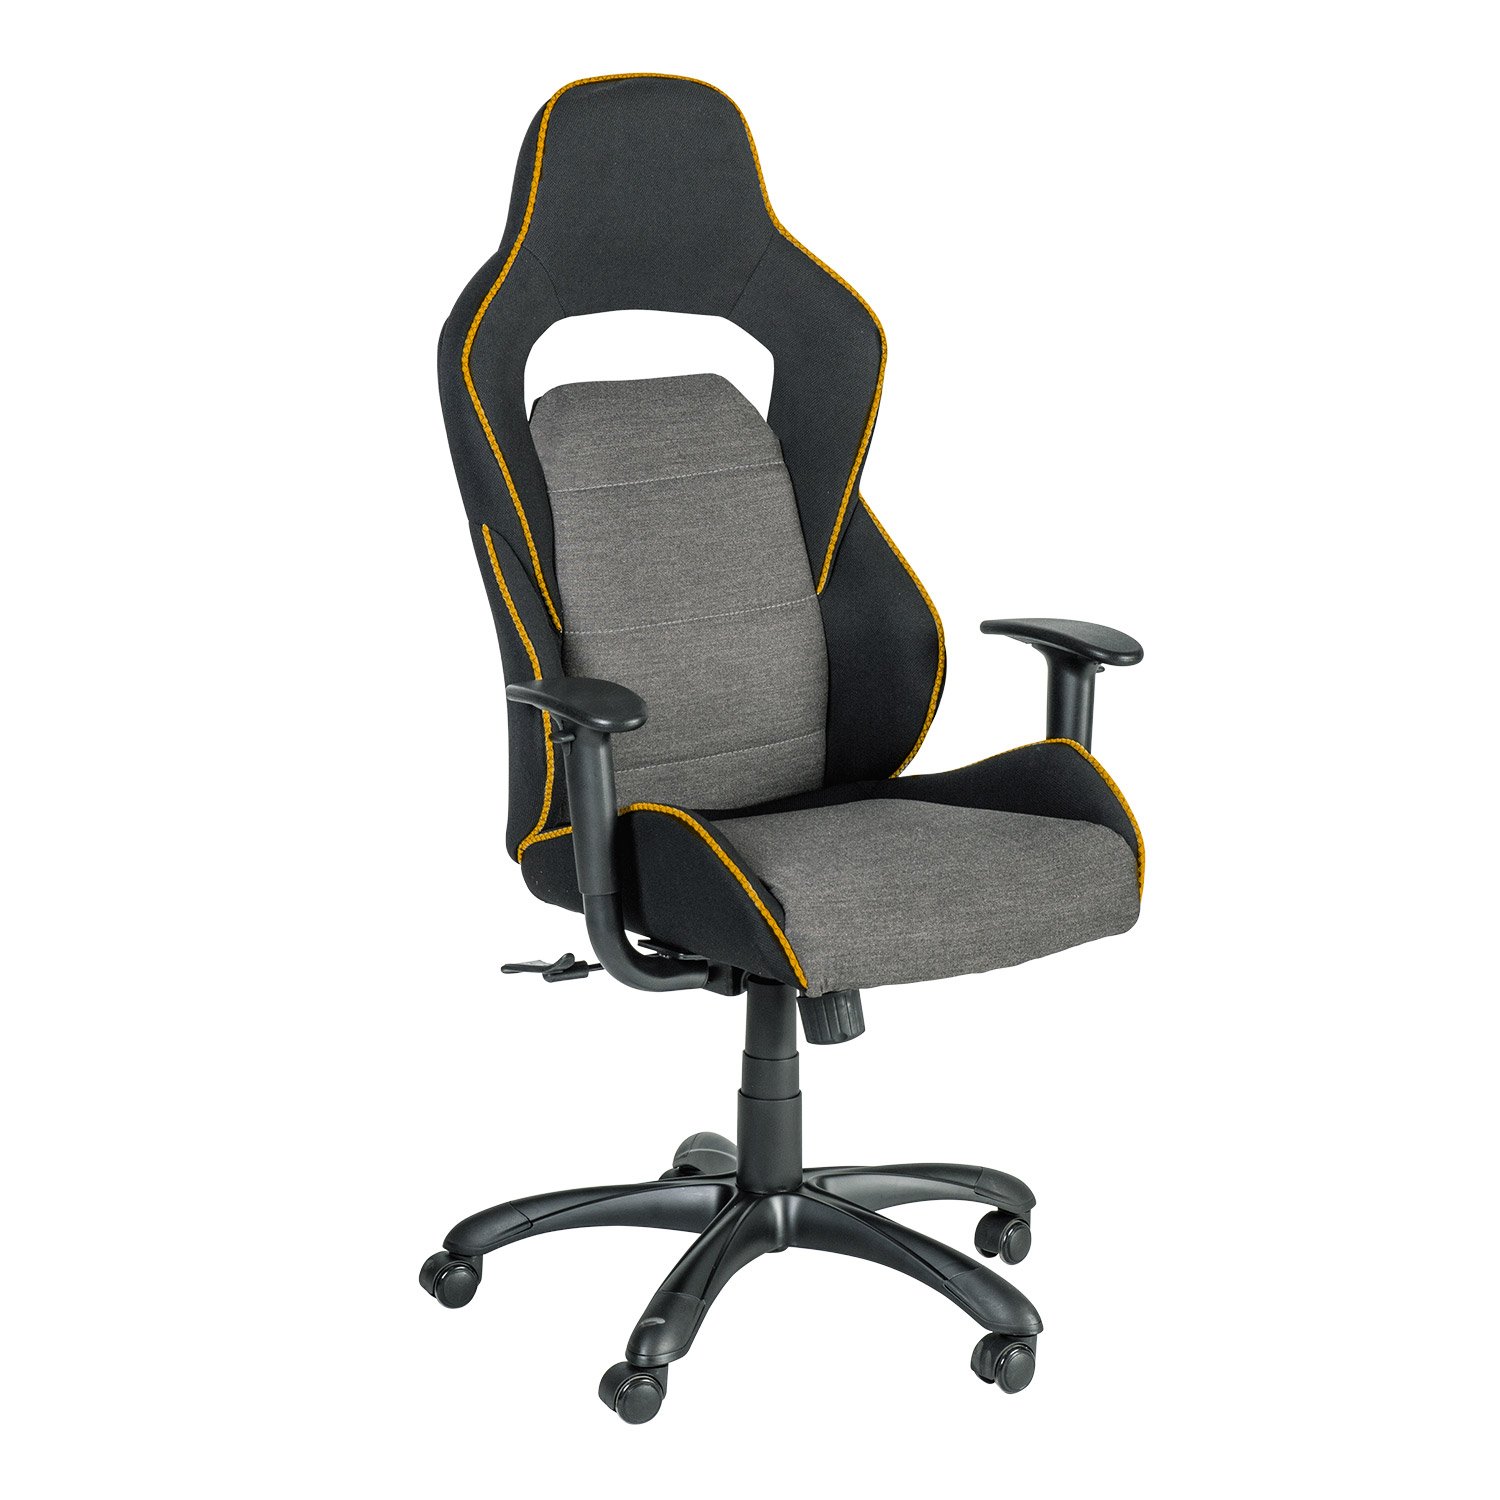 Biuro kėdė COMFORT 69x68xH120-130 cm, juoda/pilka - 1